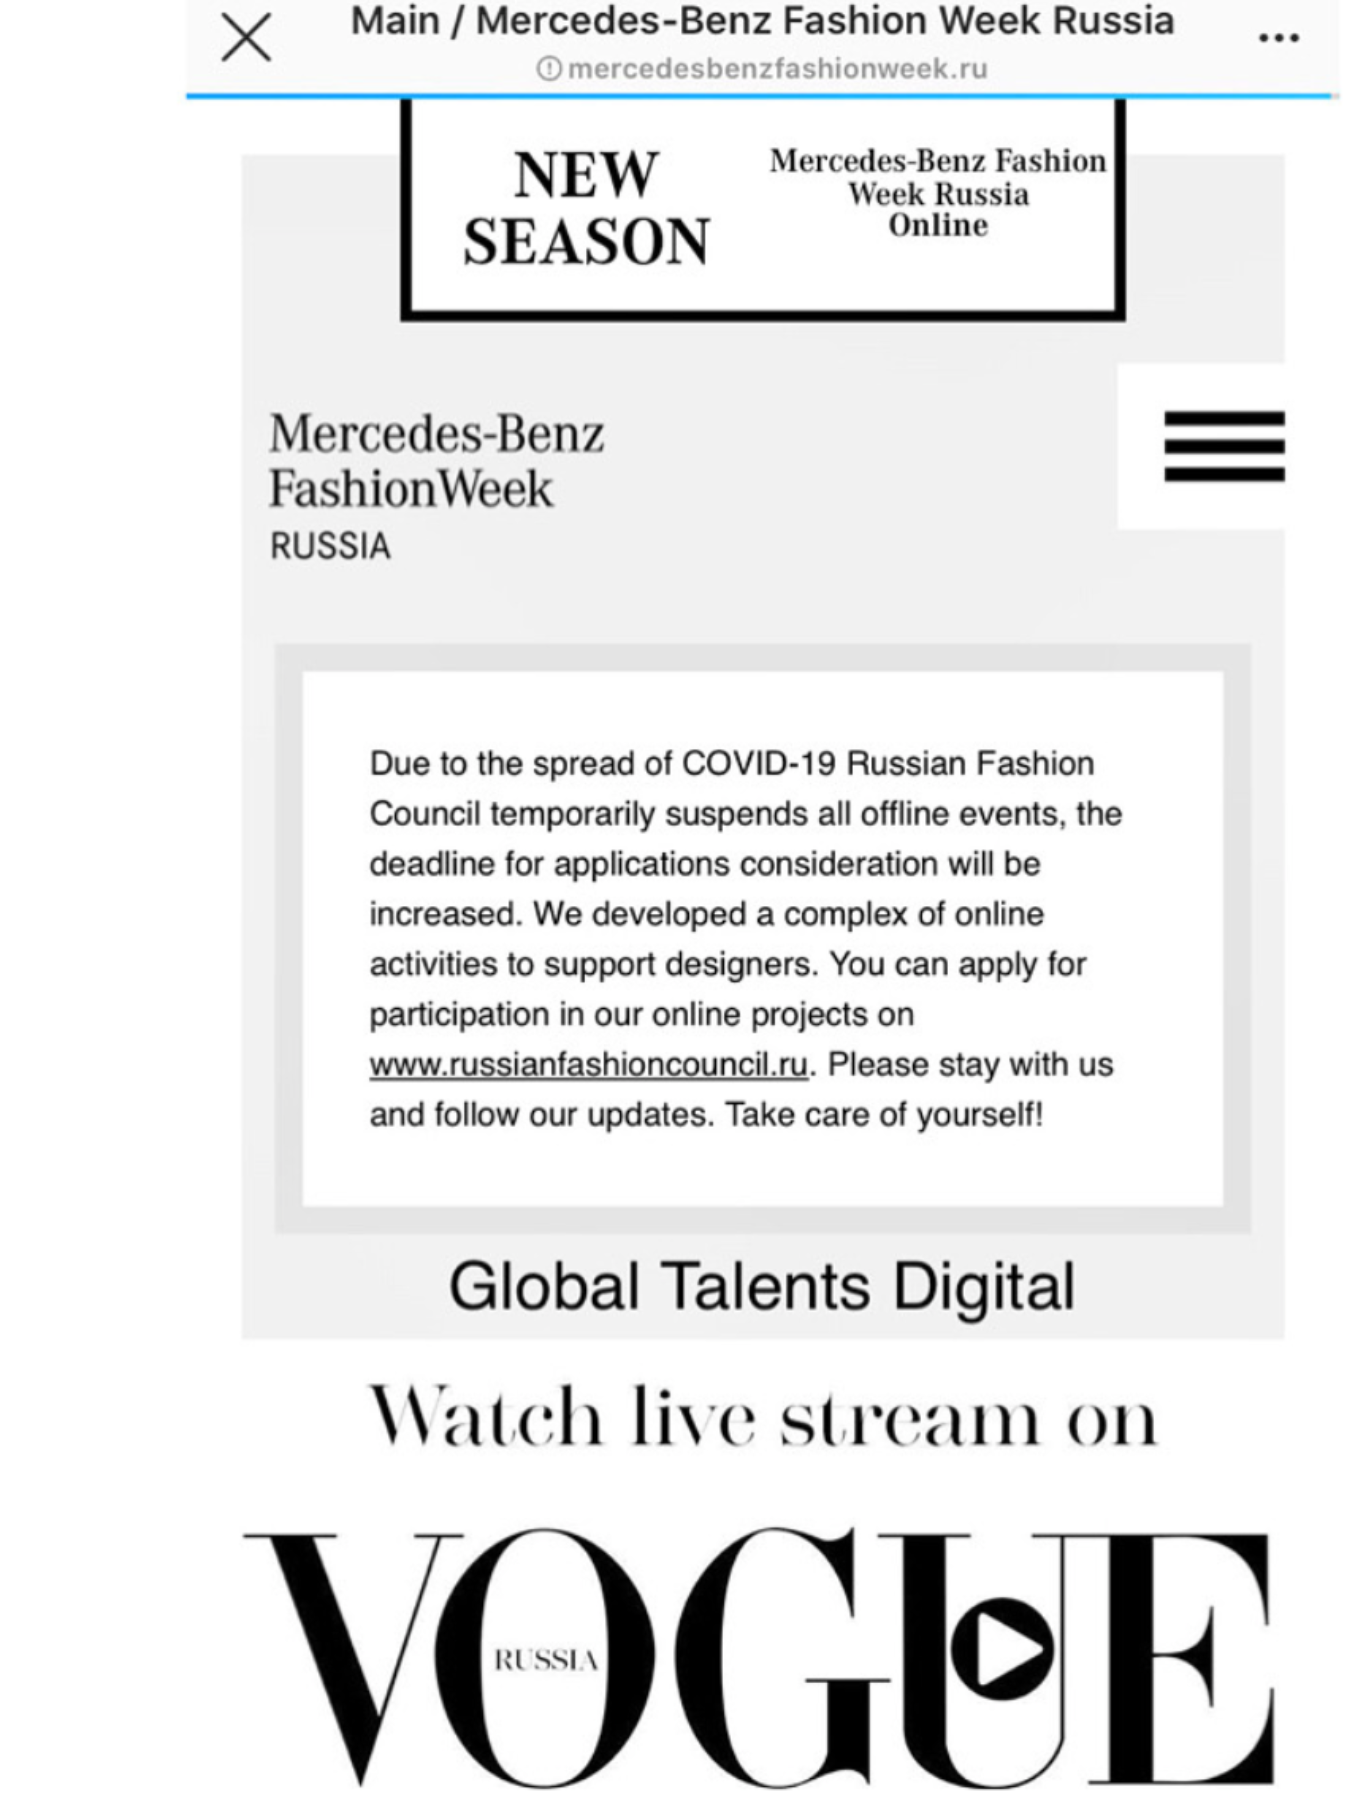 August 2020 Mercedes-Benz Fashion Week Russia, Global Talents